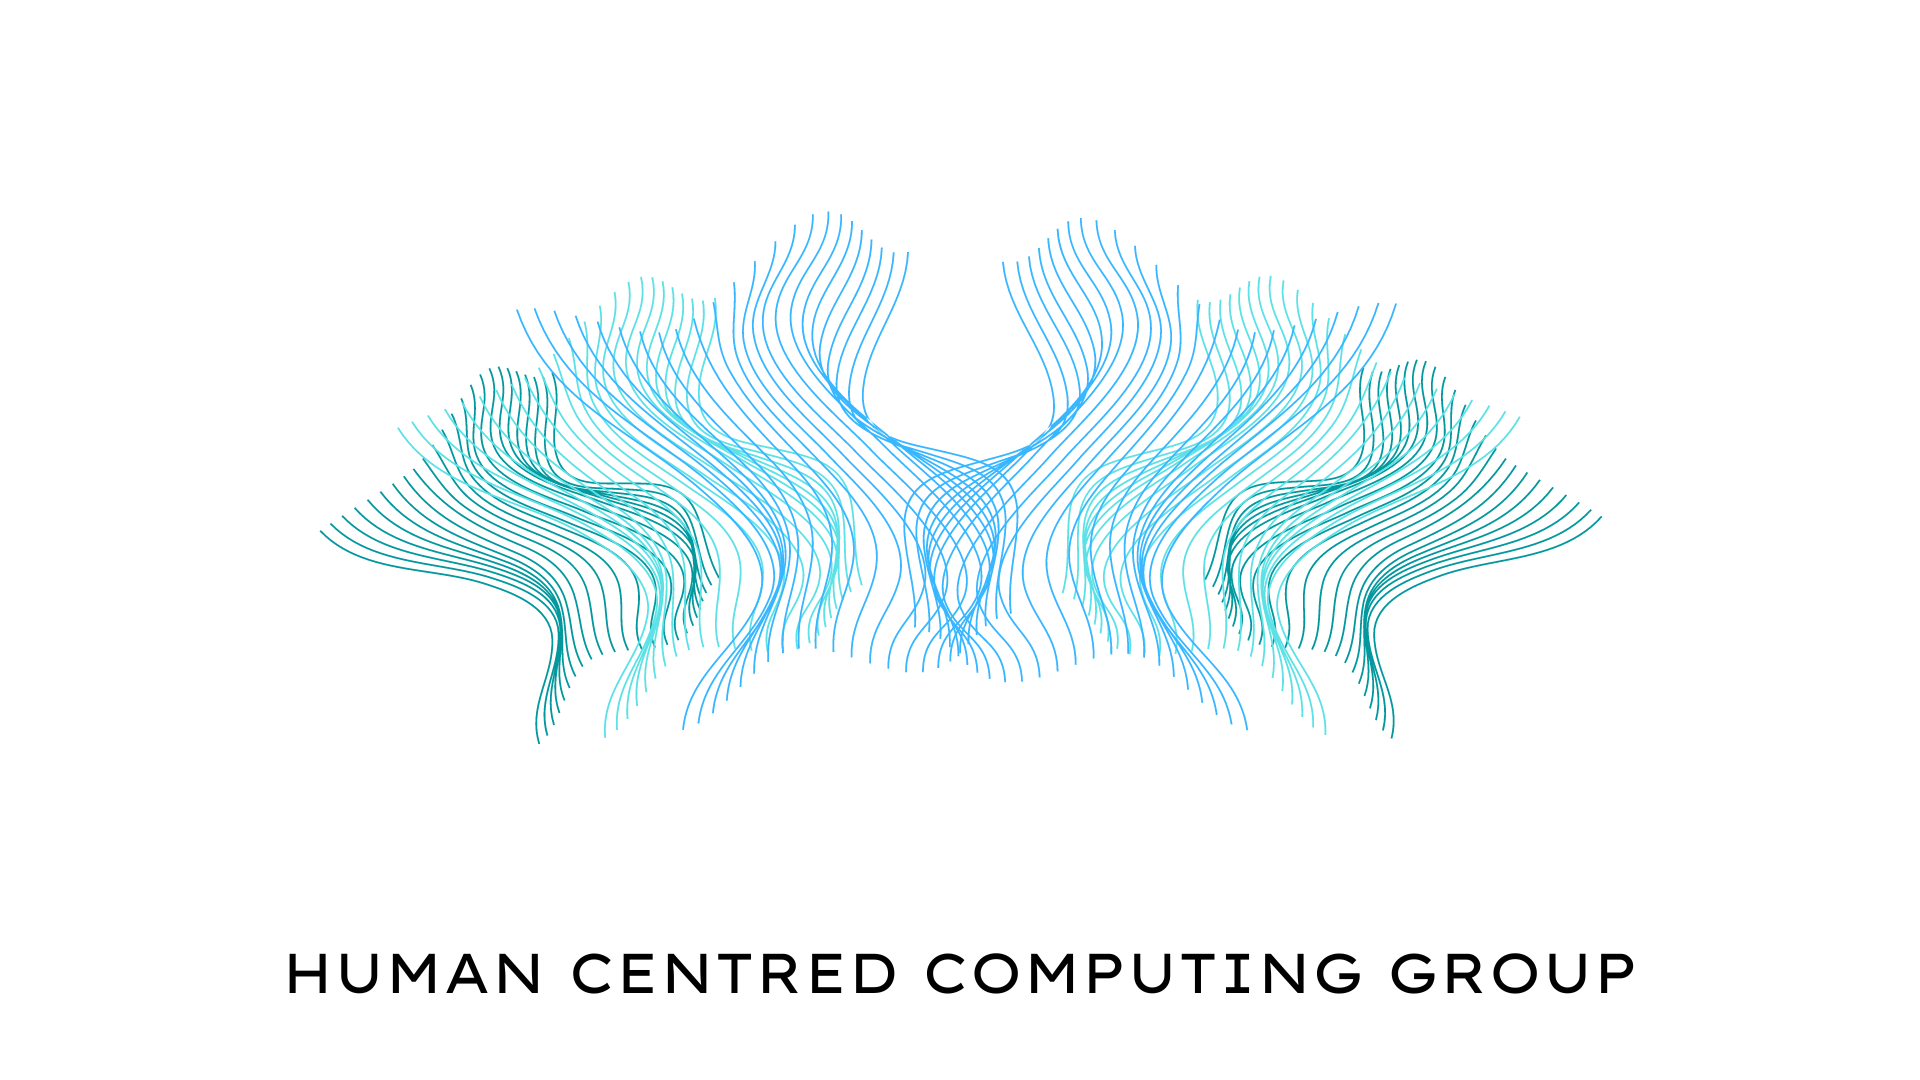 Illustration of Human-Centered Computing Group